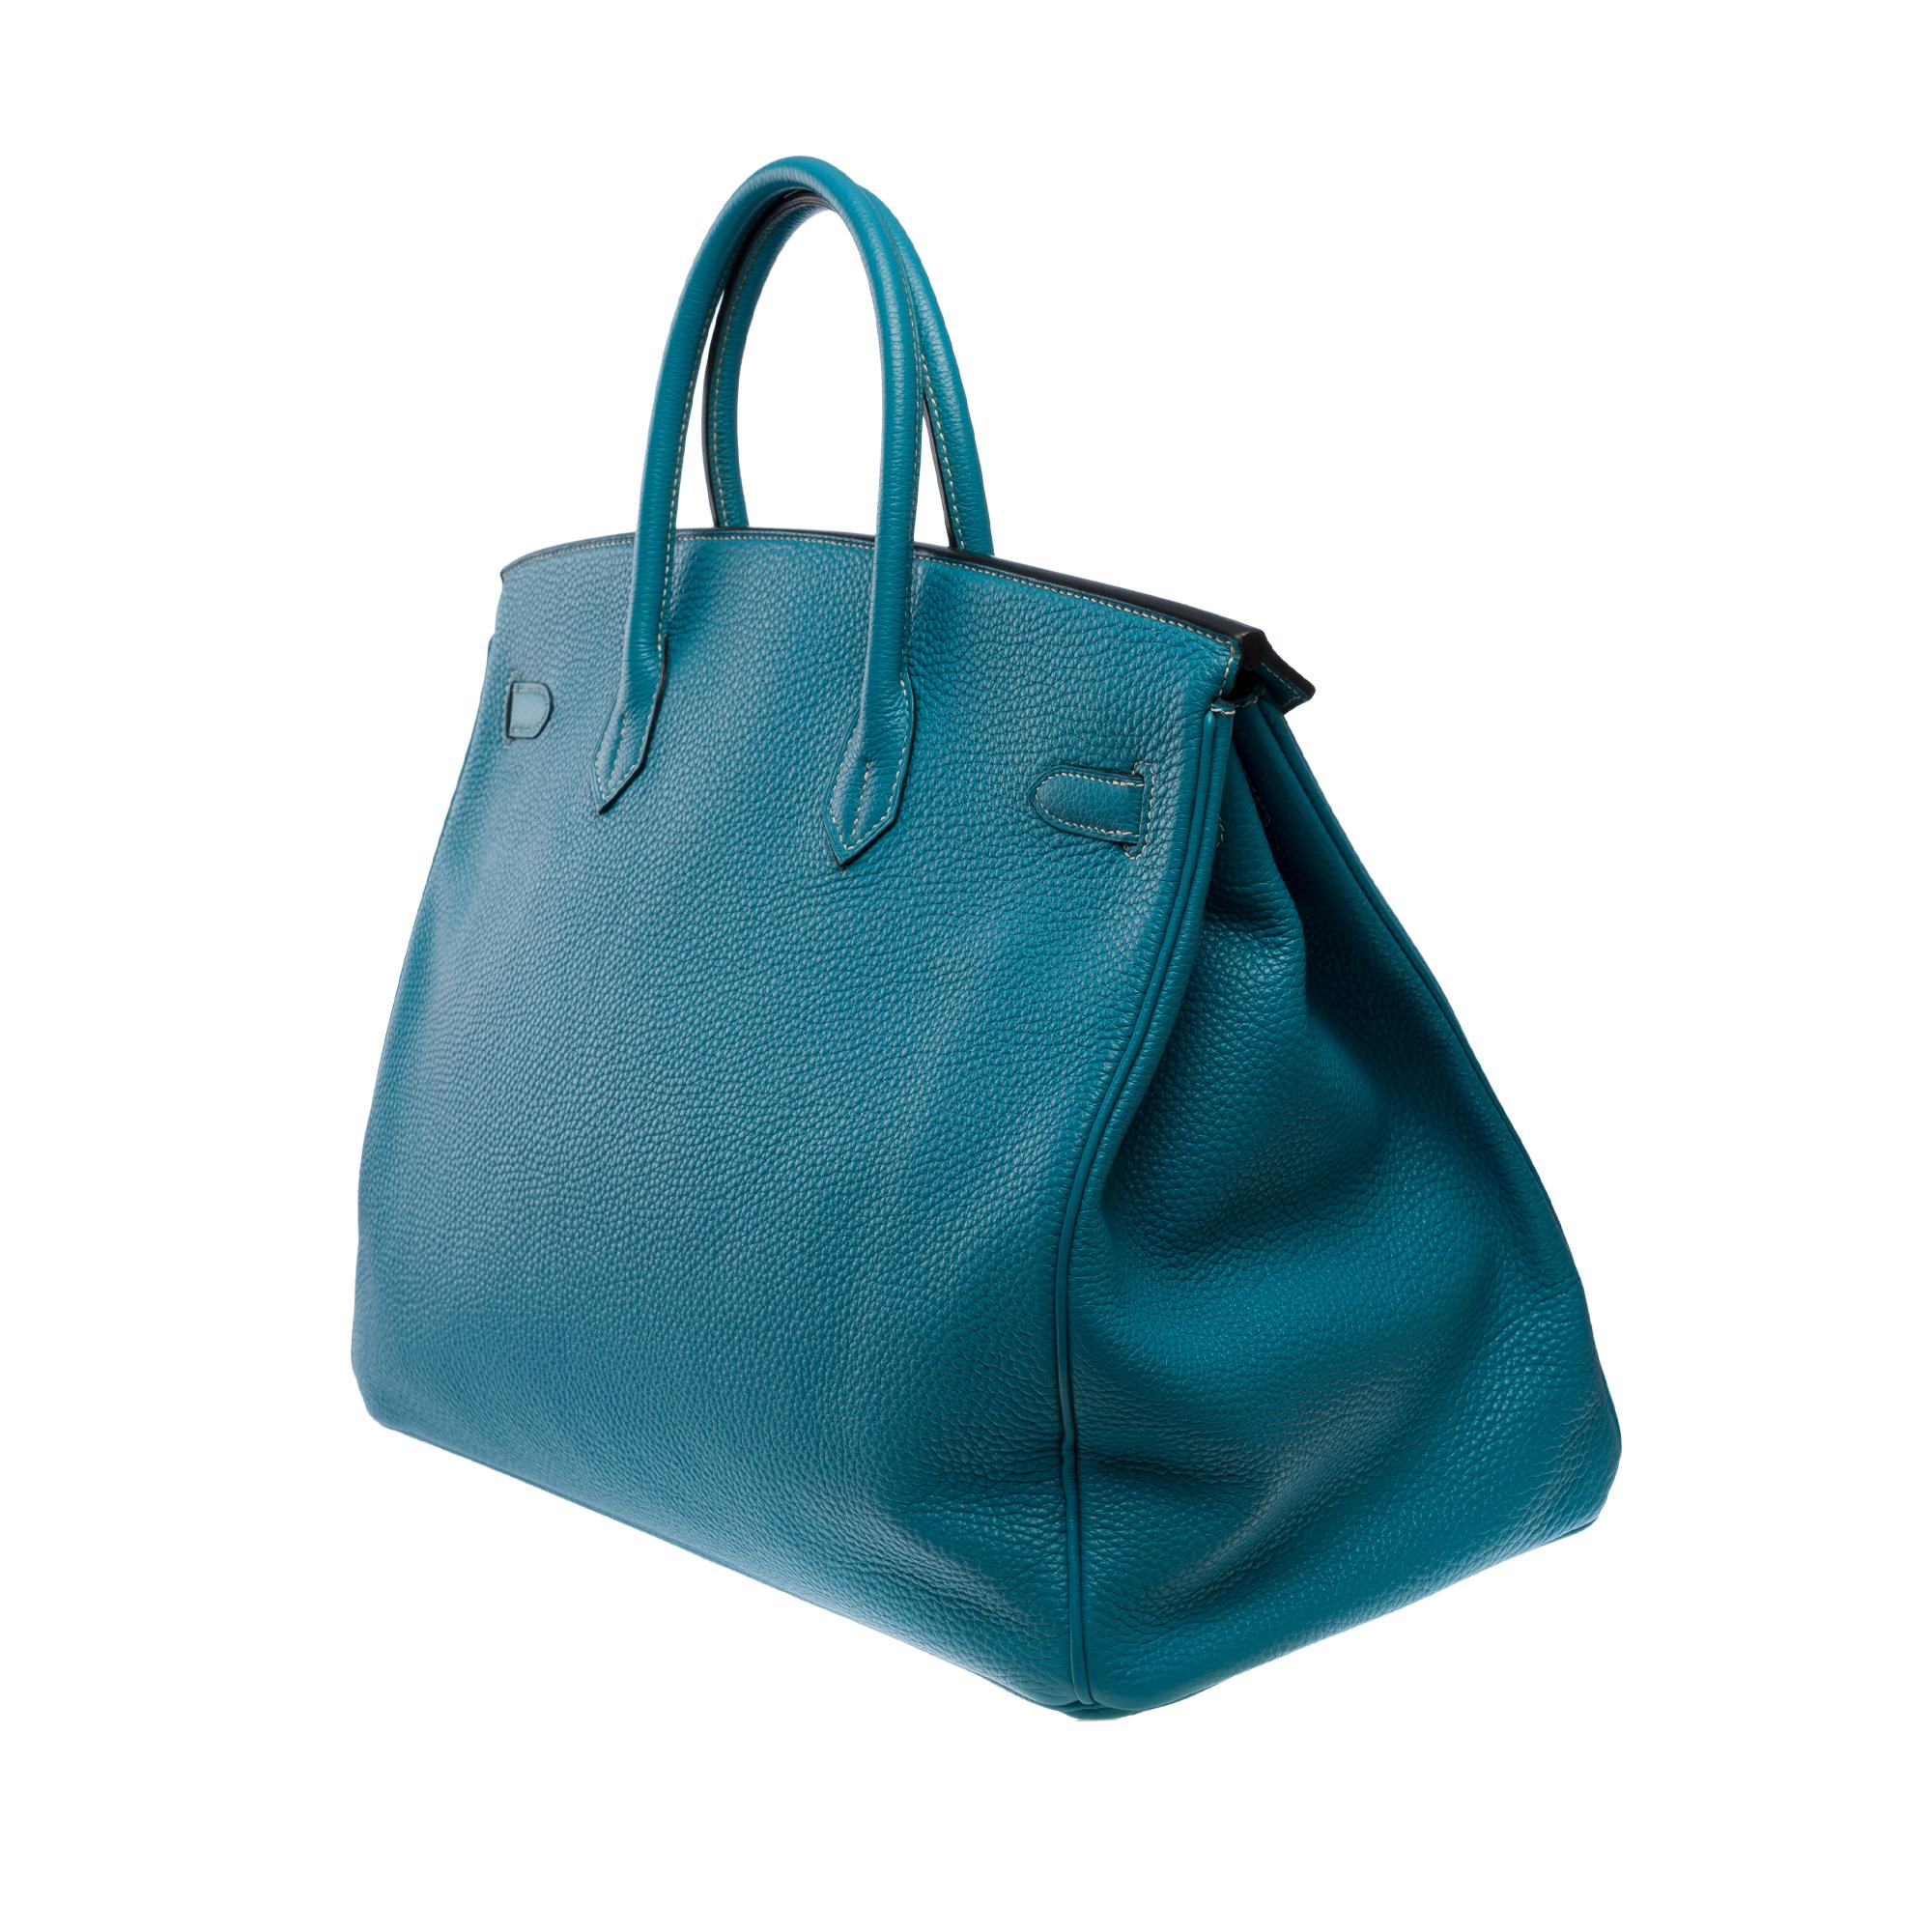 Women's or Men's Stunning Hermes Birkin 40cm handbag in Blue Jean Togo leather, SHW